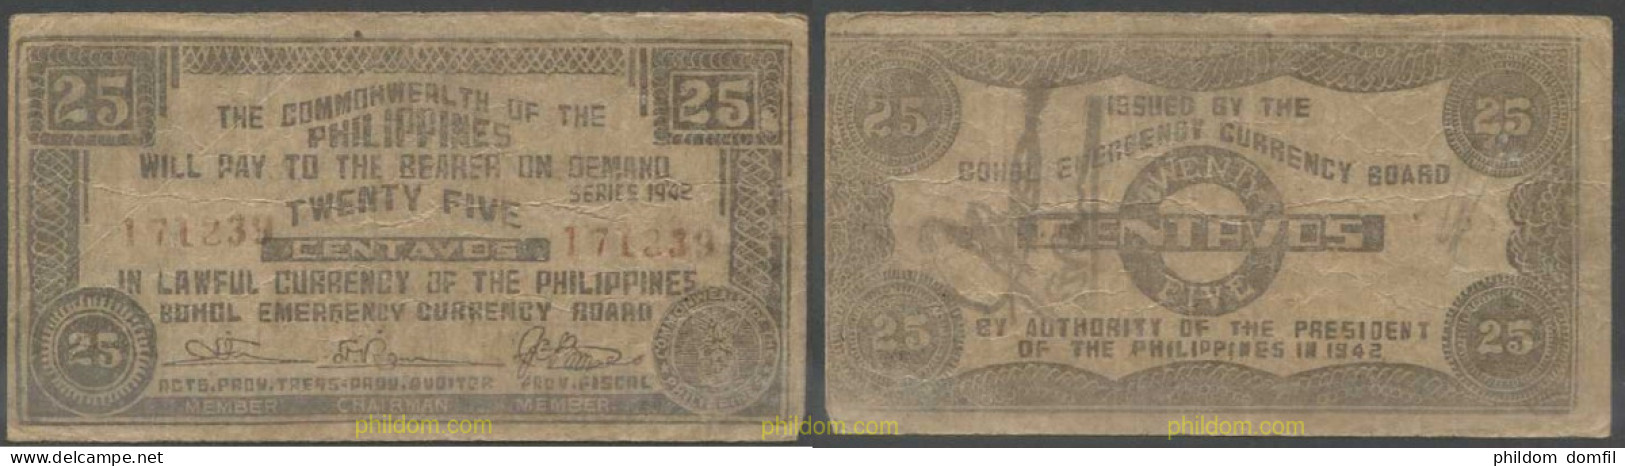 5898 FILIPINAS 1942 FILIPINAS 25 CENTAVOS 1942 - Philippinen